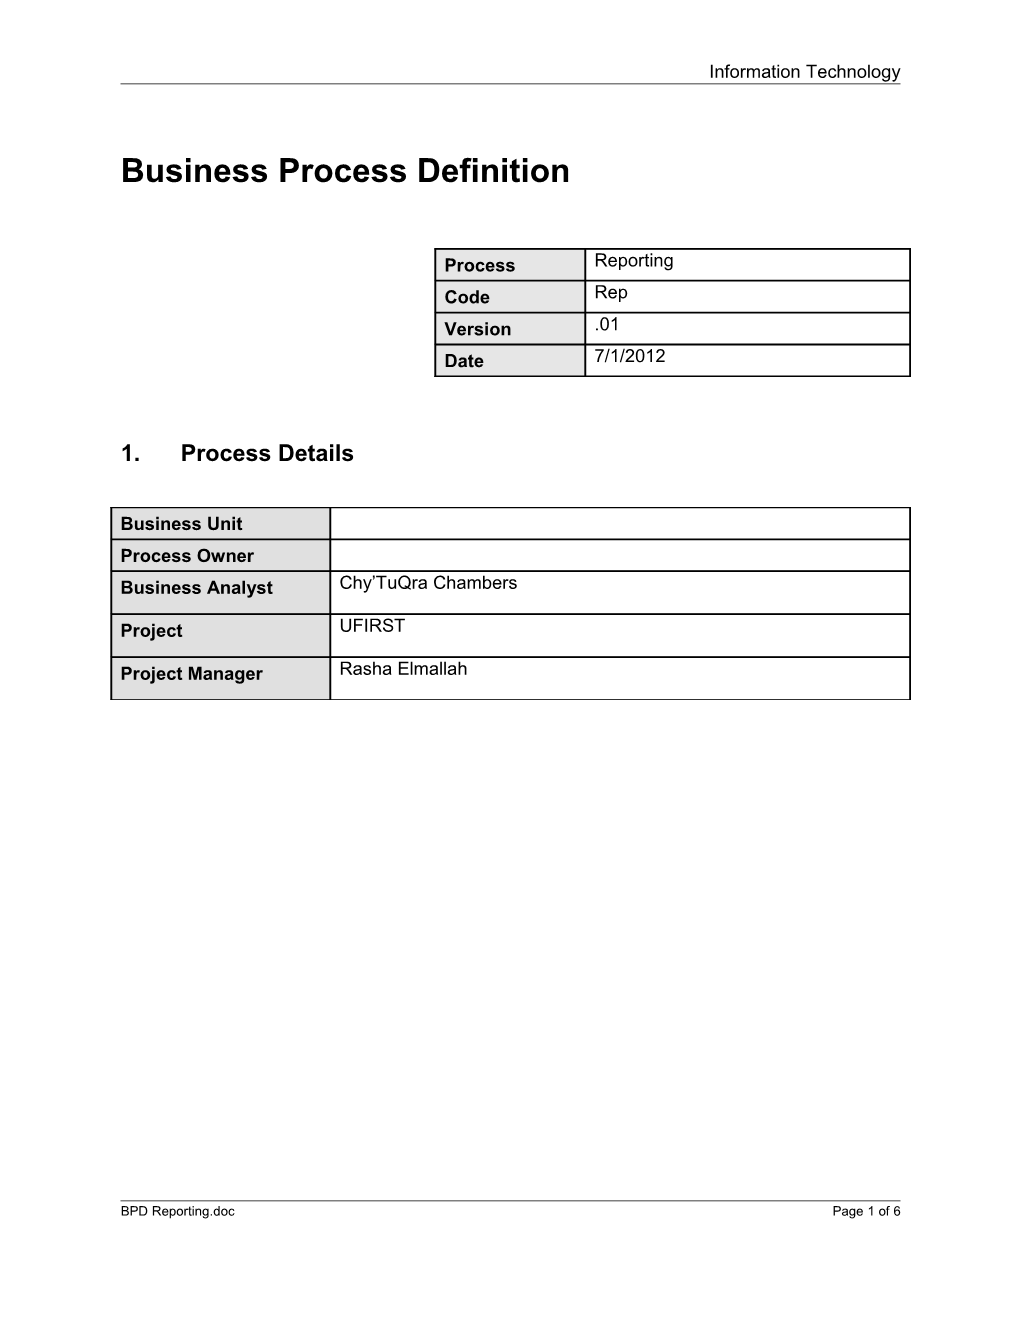 Business Process Definition s1